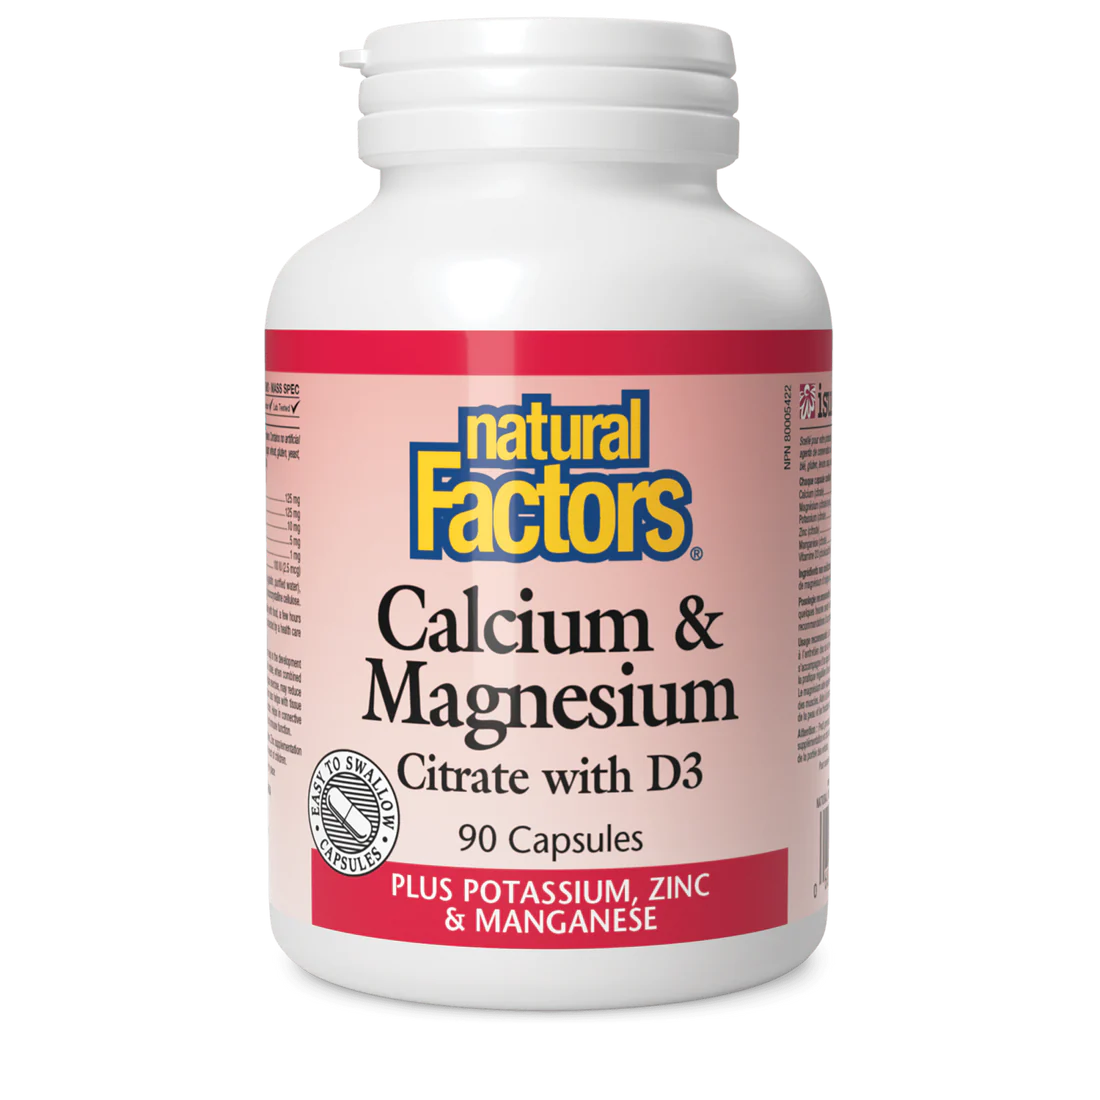 Calcium &.Magnesium  Citrate with D3 by Natural Factors, 90 capsules